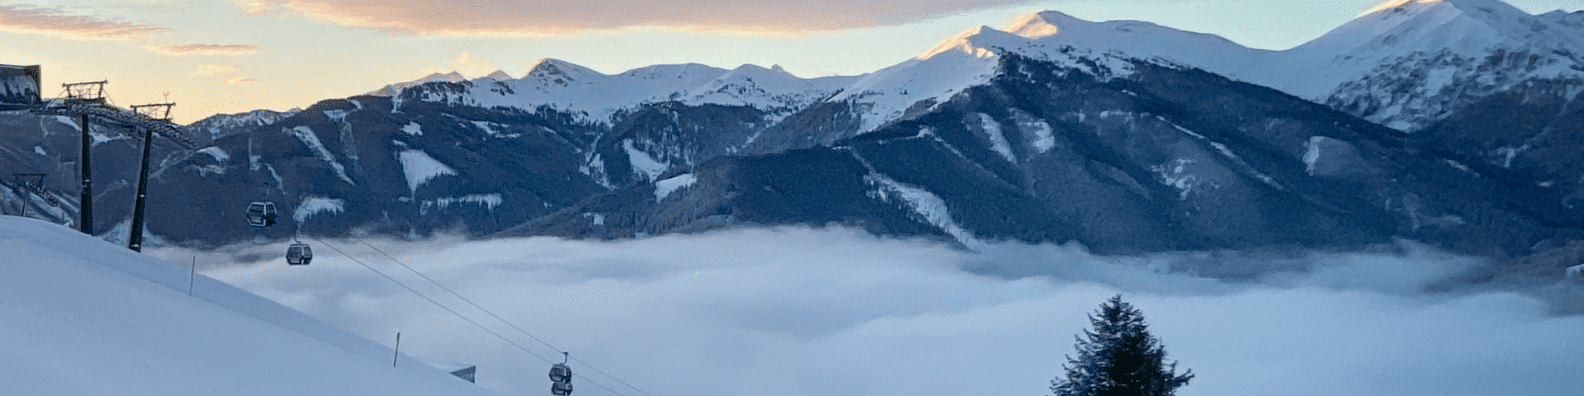 best ski resorts austria Saalbach Hinterglemm